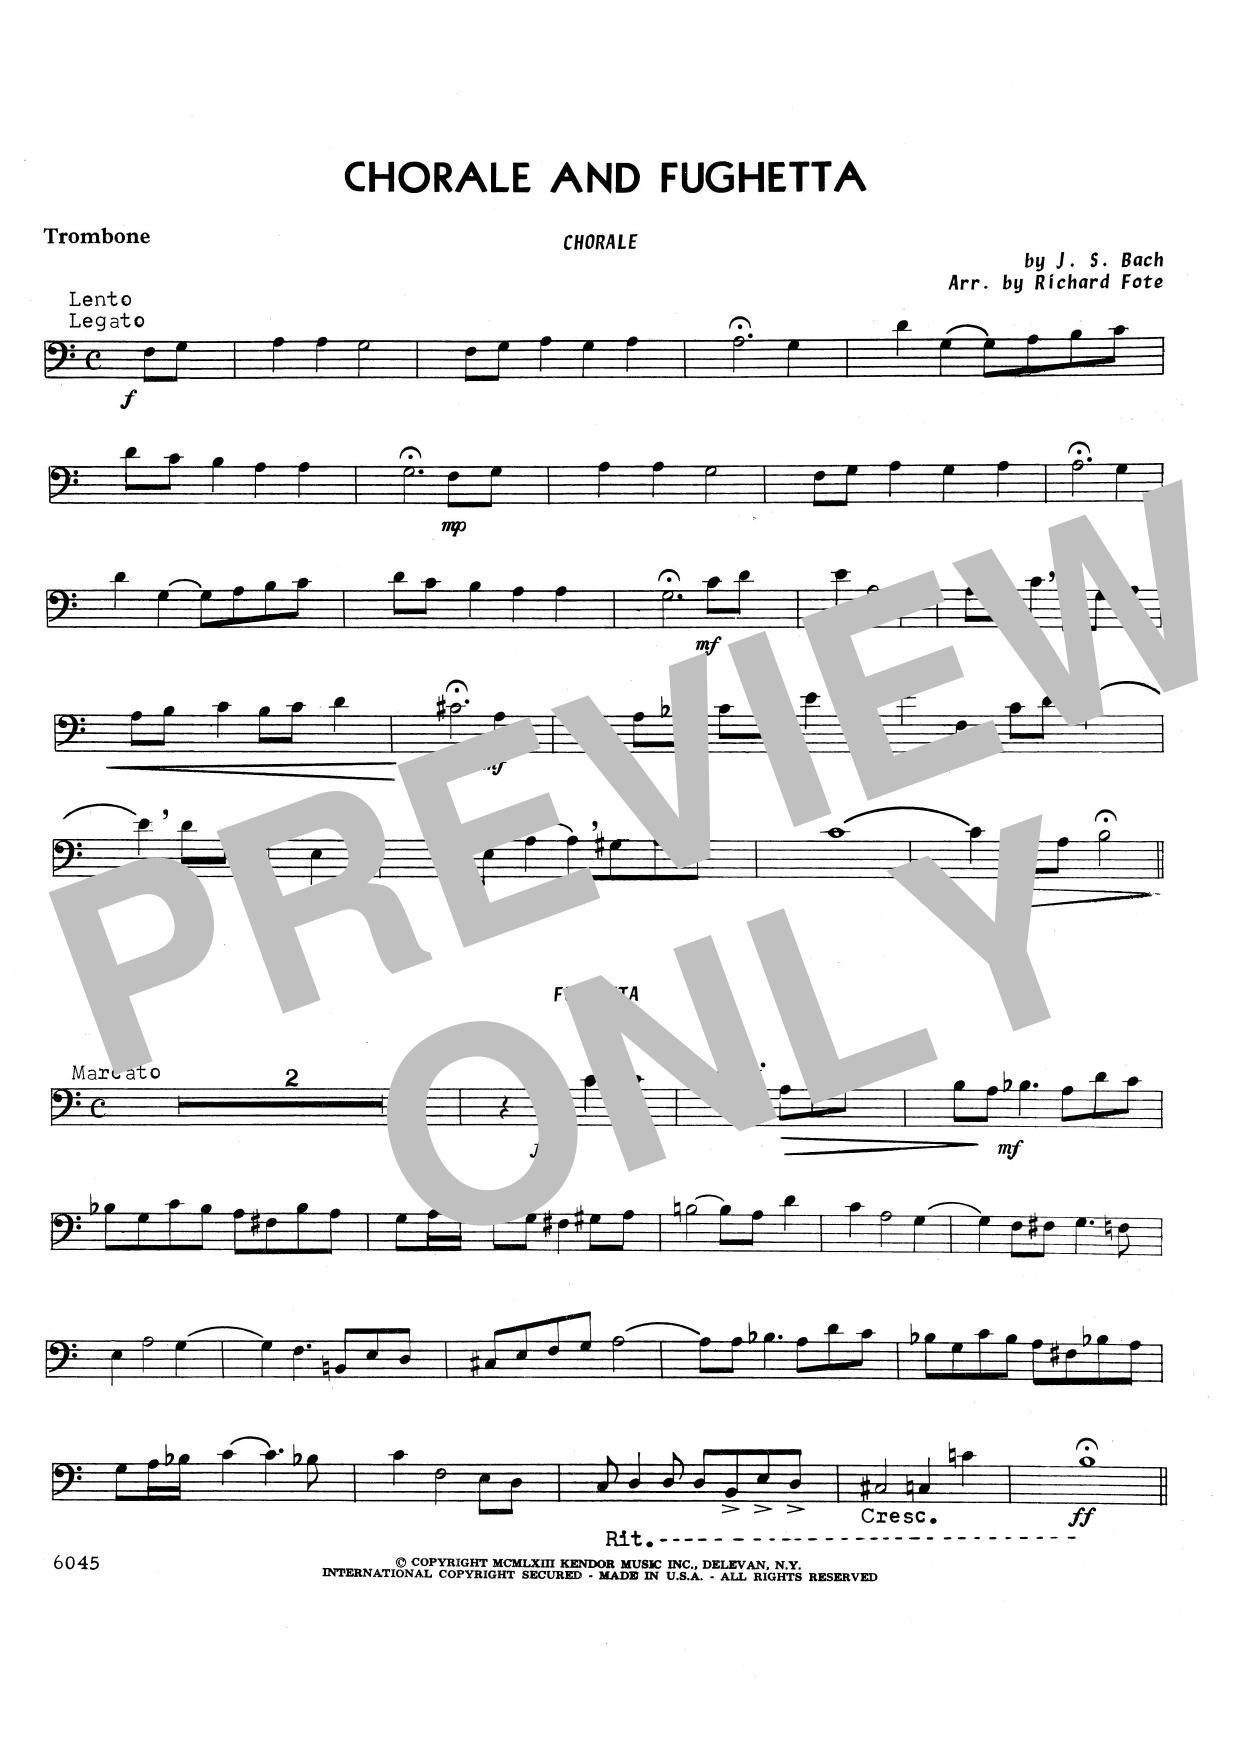 Download Richard Fote Chorale And Fughetta - Trombone Sheet Music